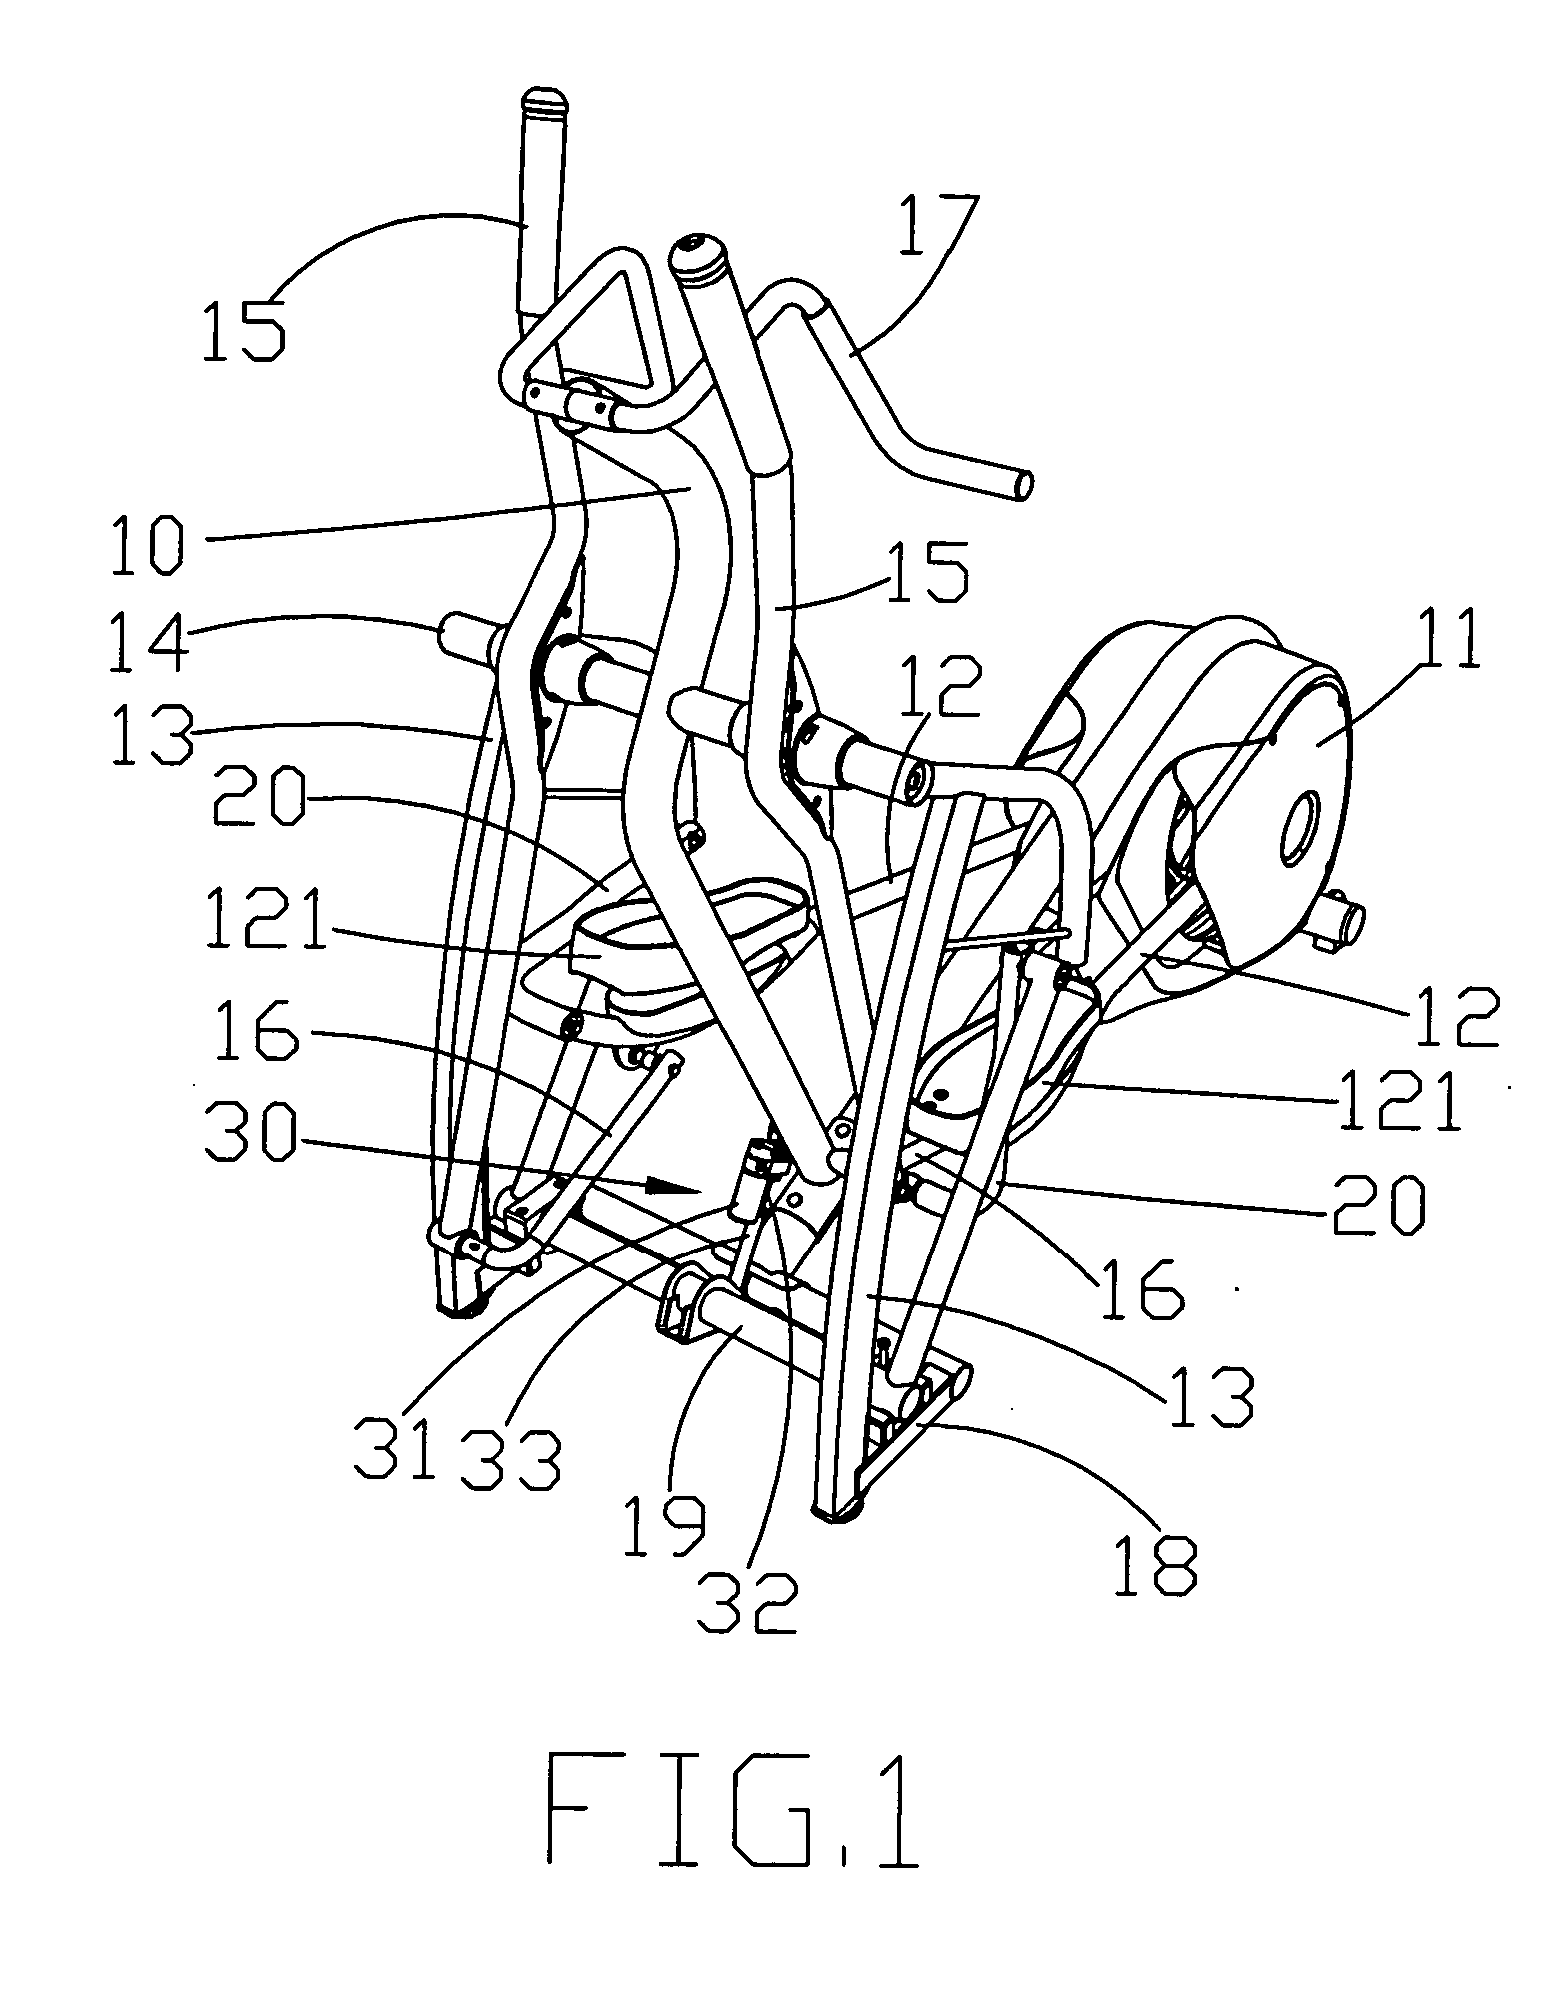 Pace-adjusting mechanism of an elliptical cross trainer